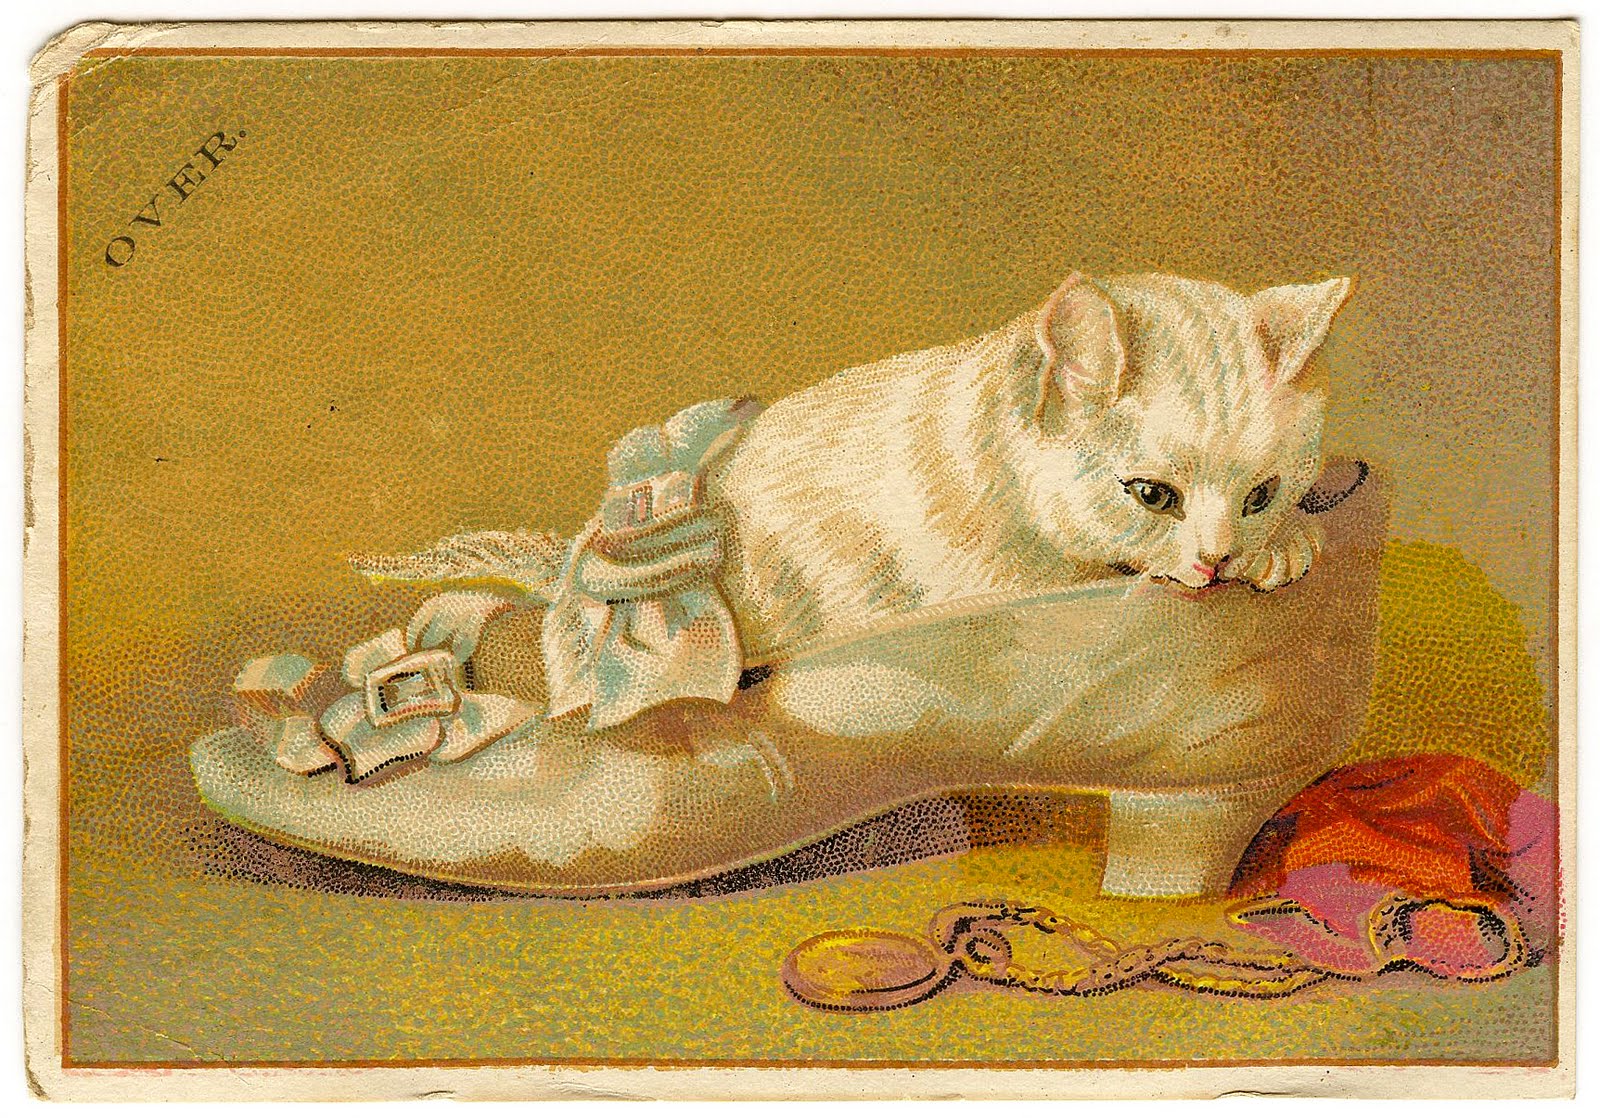 Vintage Clip Art - Kitten in Slipper - Ephemera - The Graphics Fairy1600 x 1118